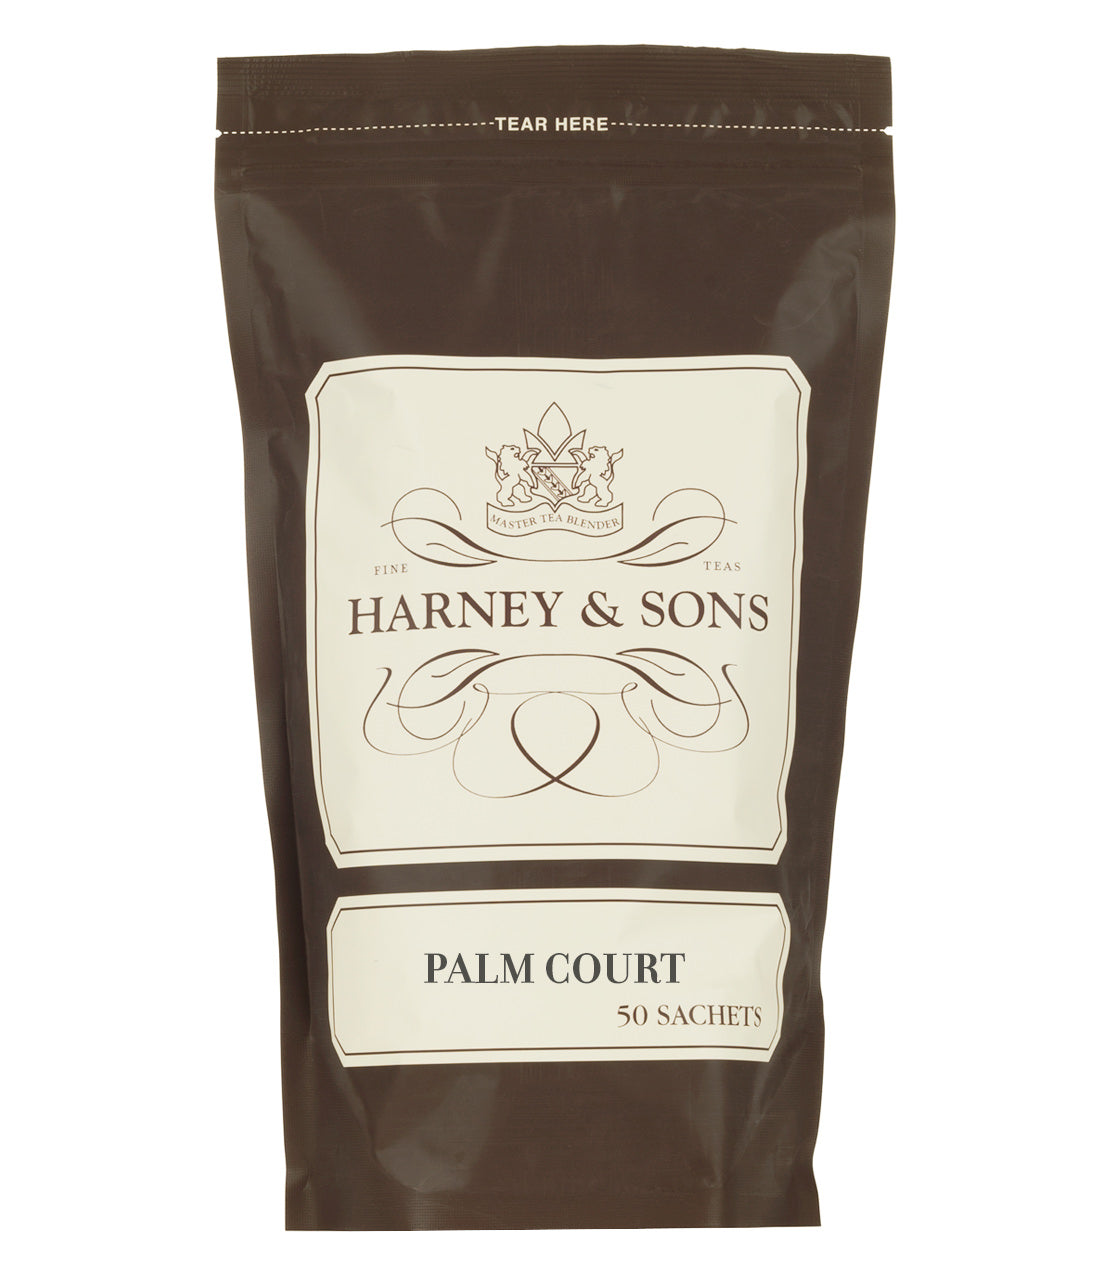 Palm Court - Sachets Bag of 50 Sachets - Harney & Sons Fine Teas